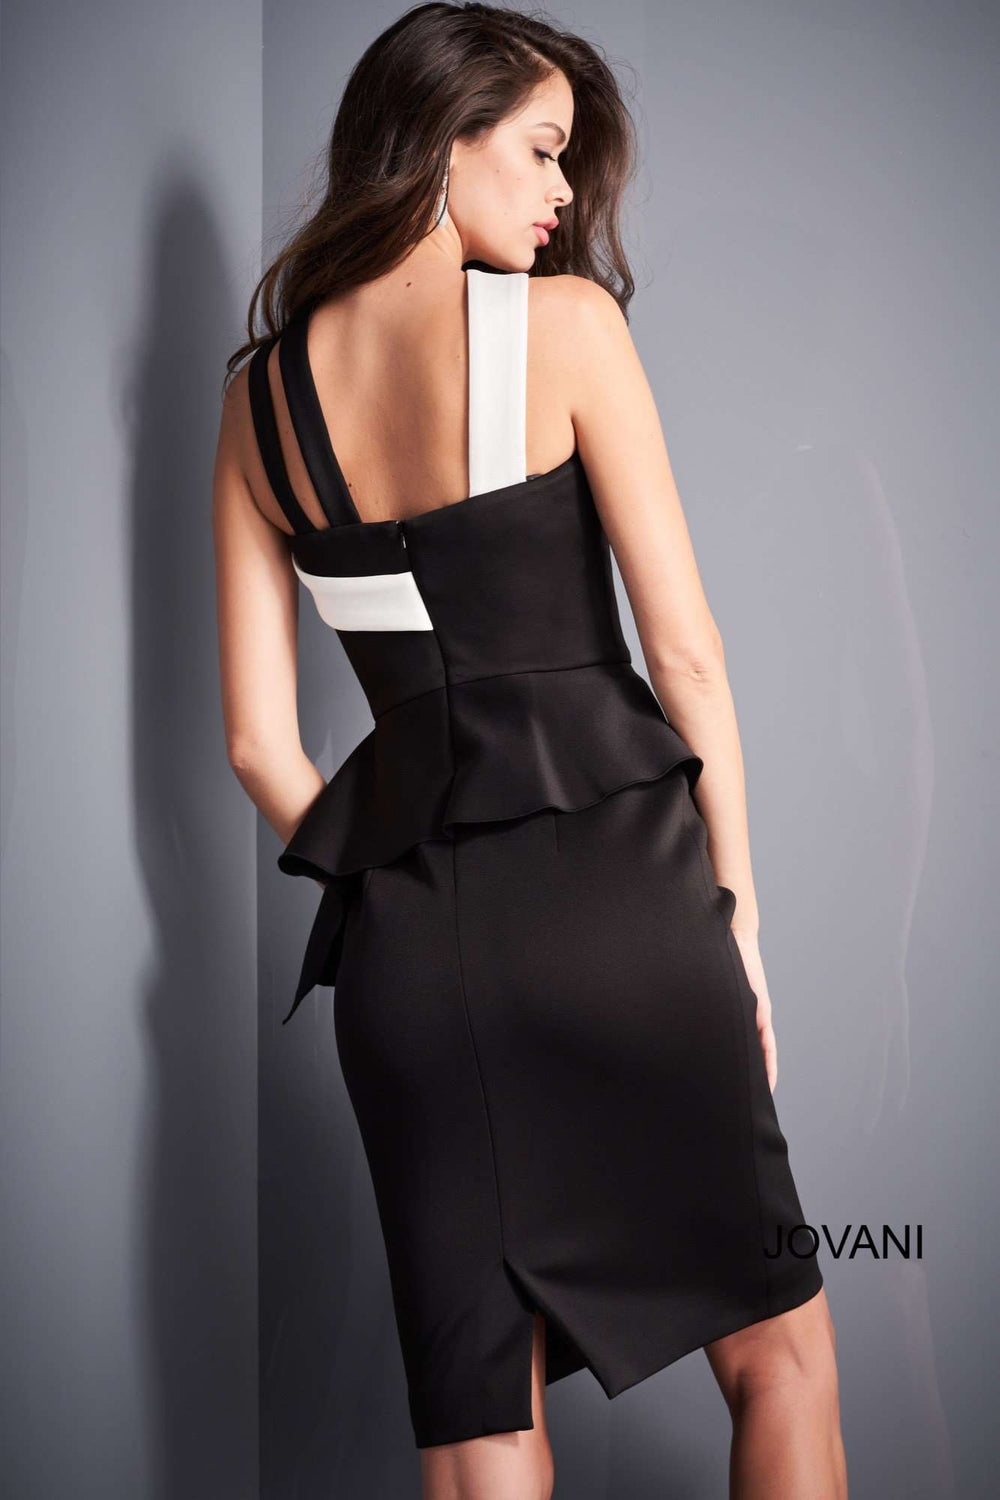 Black White Knee Length Cocktail Dress Jovani 04409 - Morvarieds Fashion